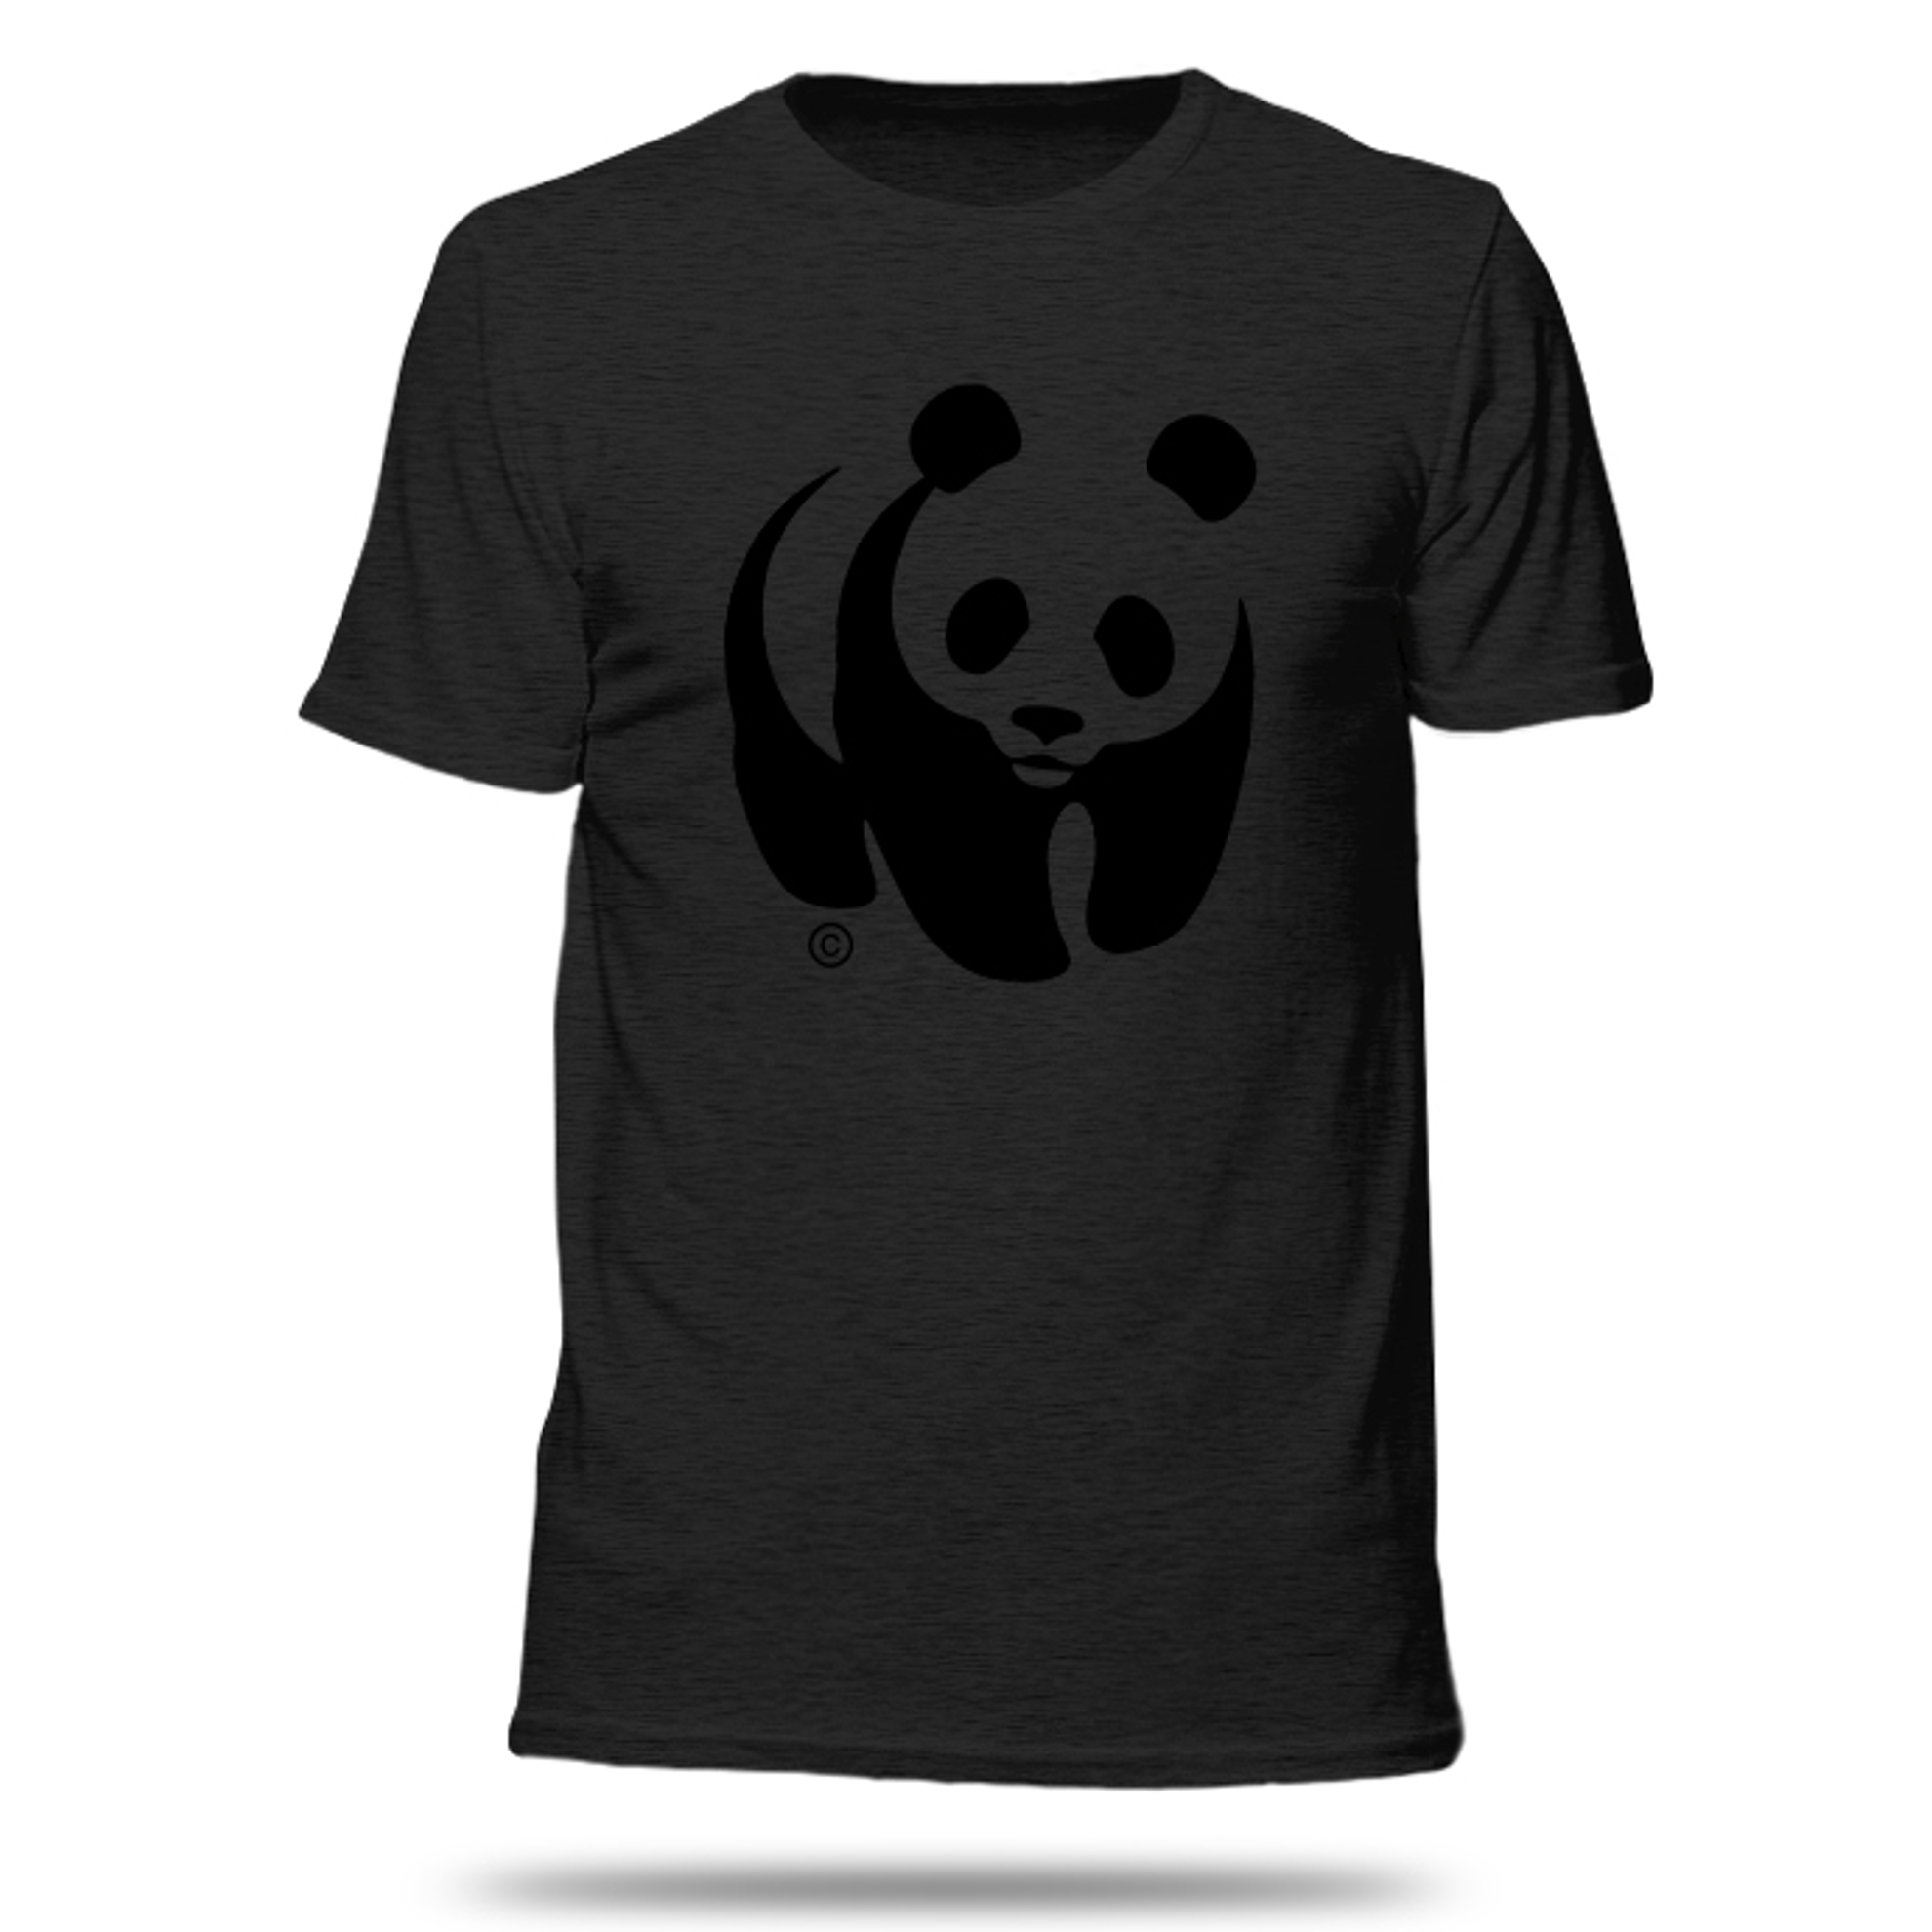 Unisex black panda t-shirt - WWF-Canada